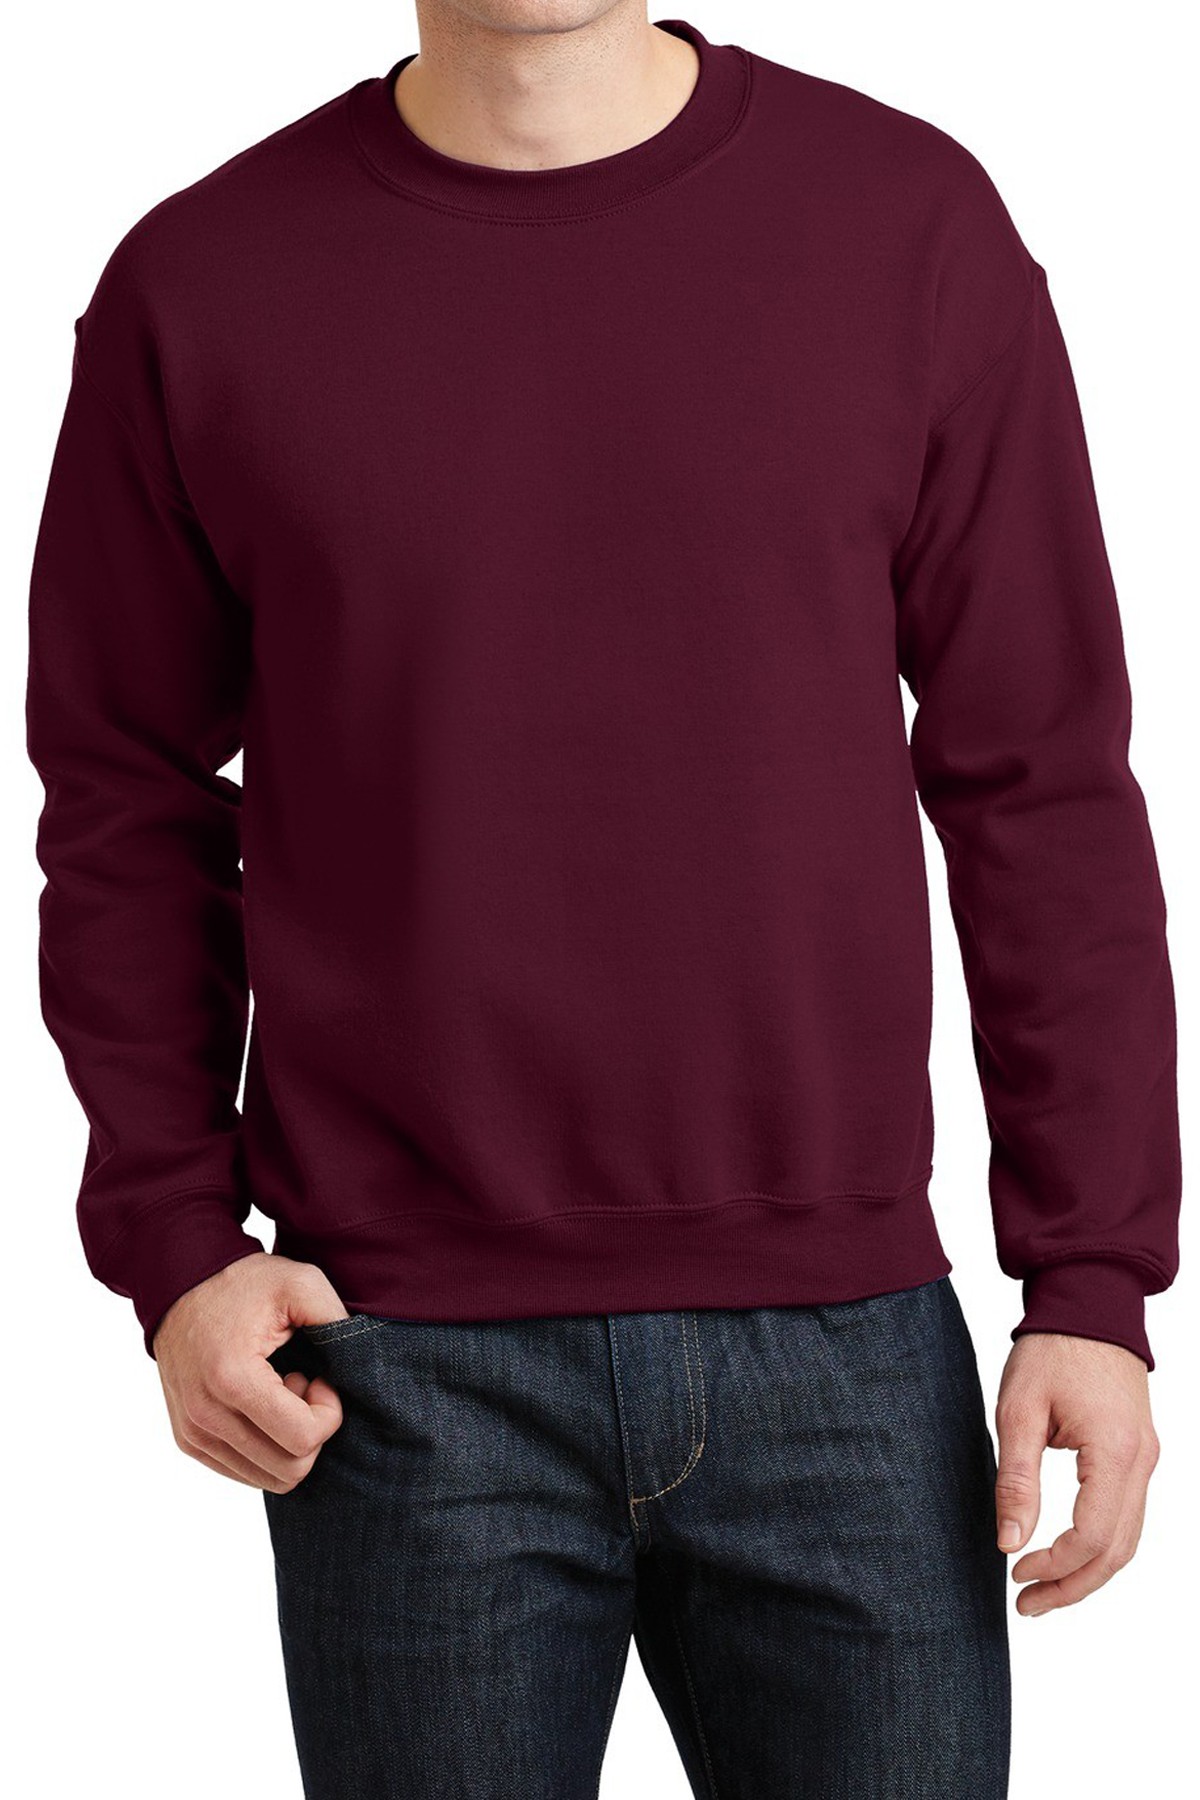 Unisex Sweatshirt Round Neck In Full Sleeves With Rib